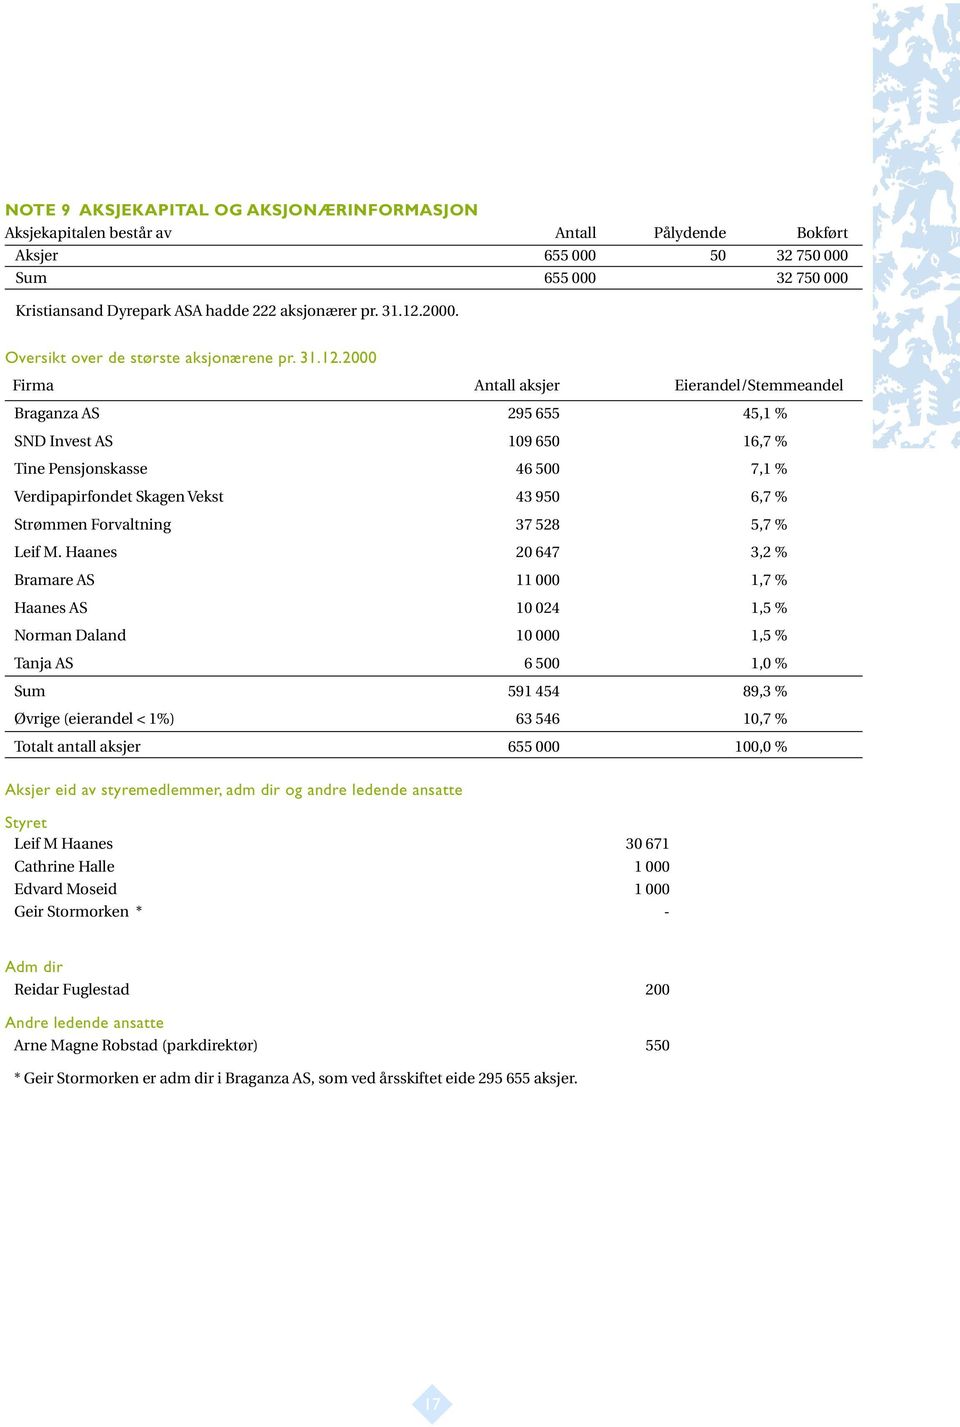 Verdipapirfondet Skagen Vekst 43 950 6,7 % Strømmen Forvaltning 37 528 5,7 % Leif M.